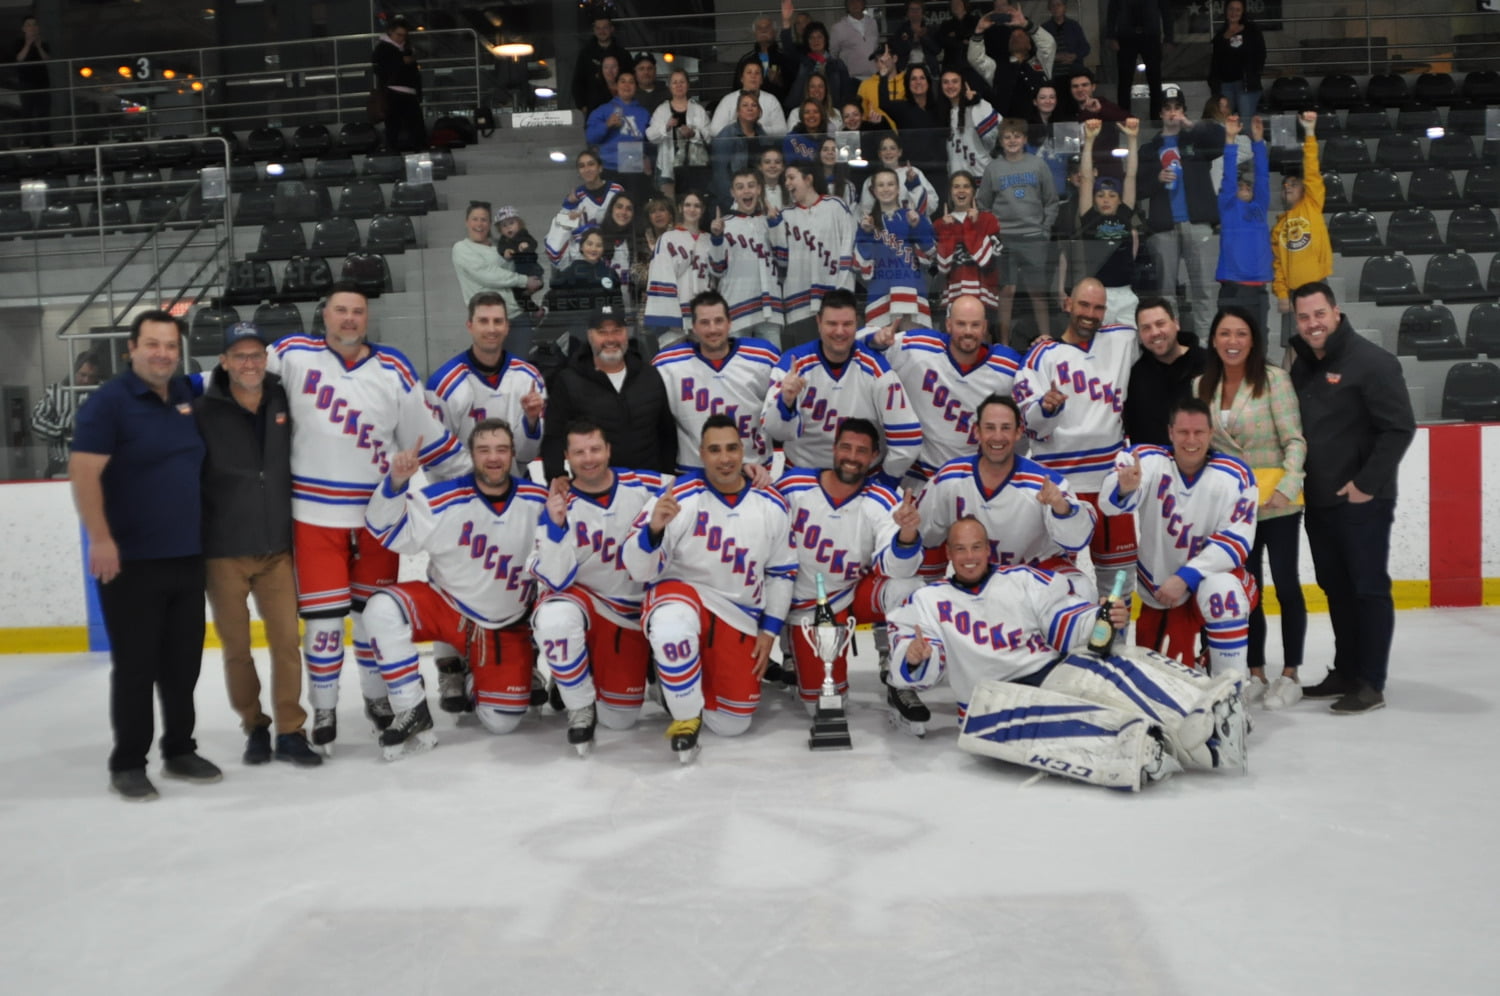 $19,000 raised for Justin-Lefebvre Foundation during Sherbrooke Adult Hockey Tournament